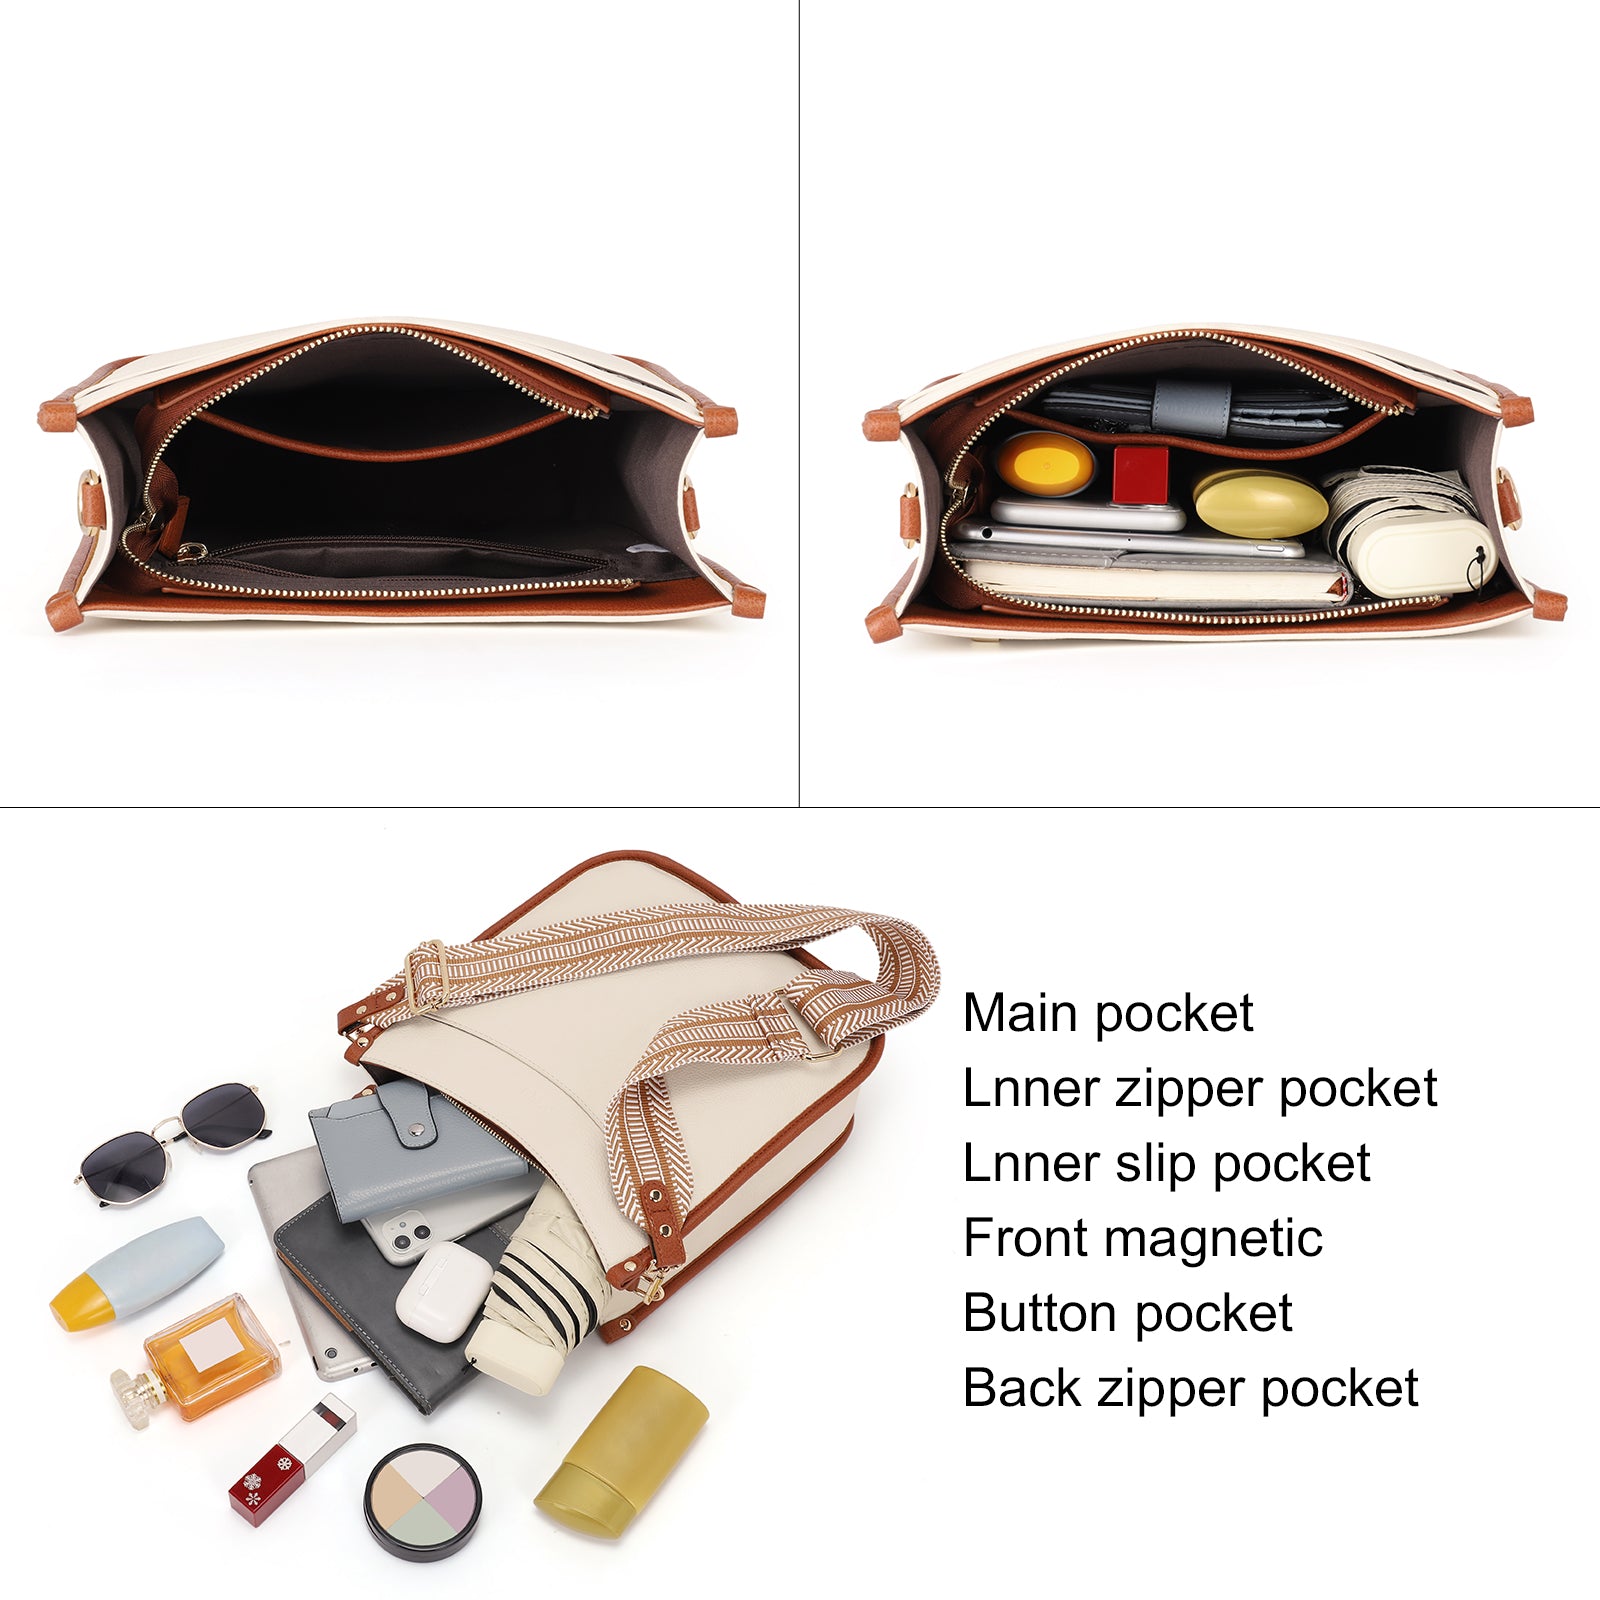 Stylish 2pcs Medium Hobo handbag and Crossbody Bag with 2 Adjust Guitar Strap